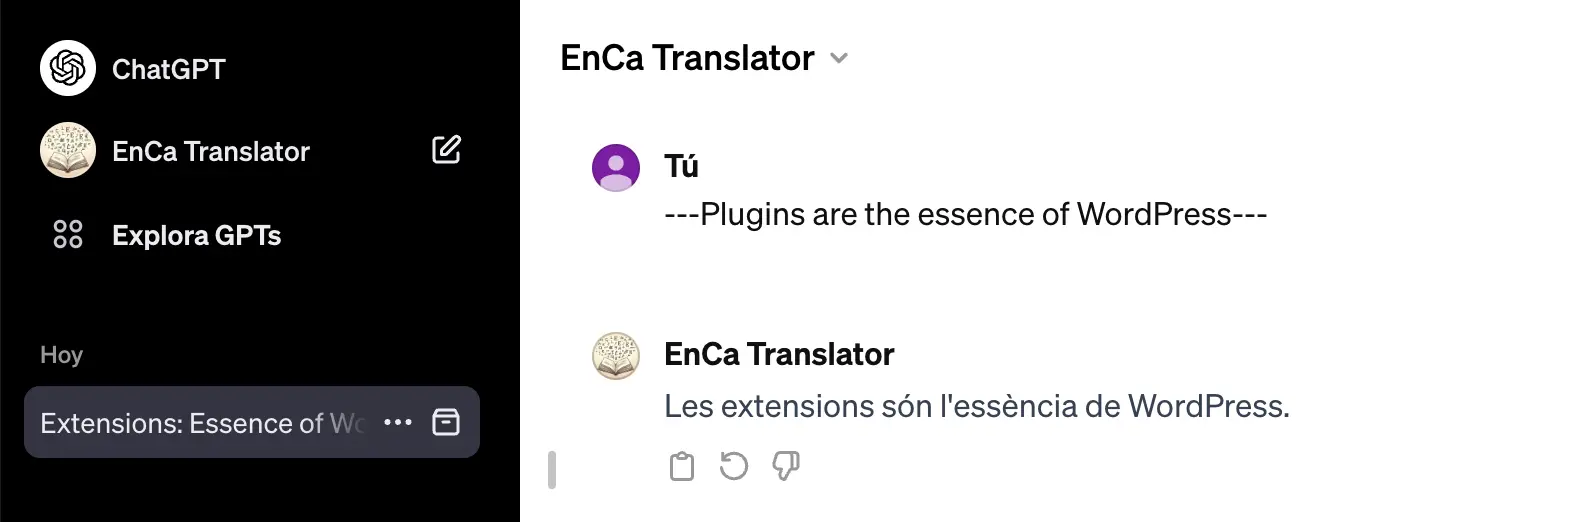 ChatGPT Assistant translator ejemplo traducción